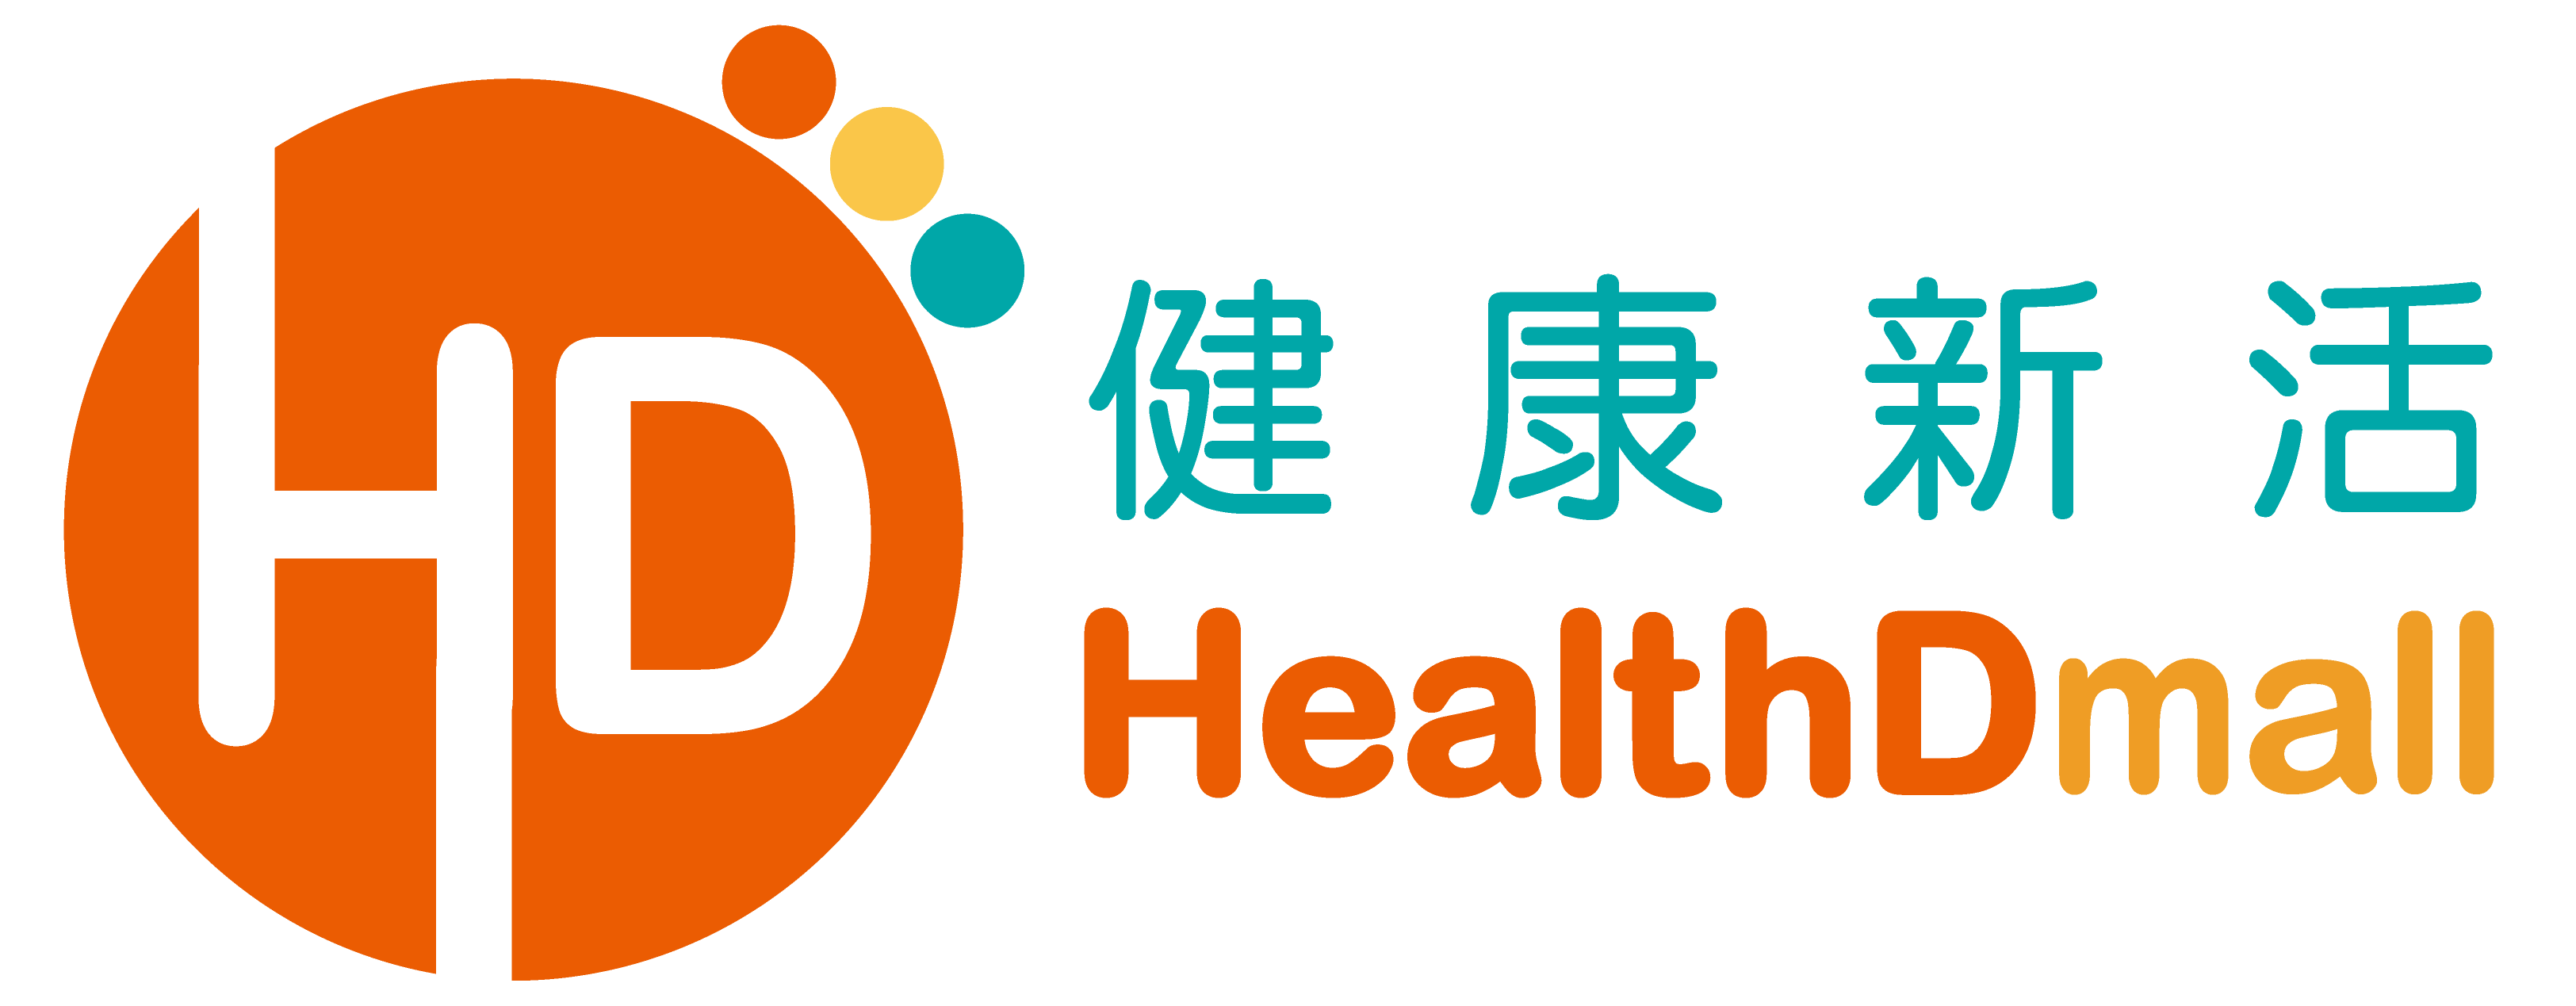 HealthDmall 健康新活